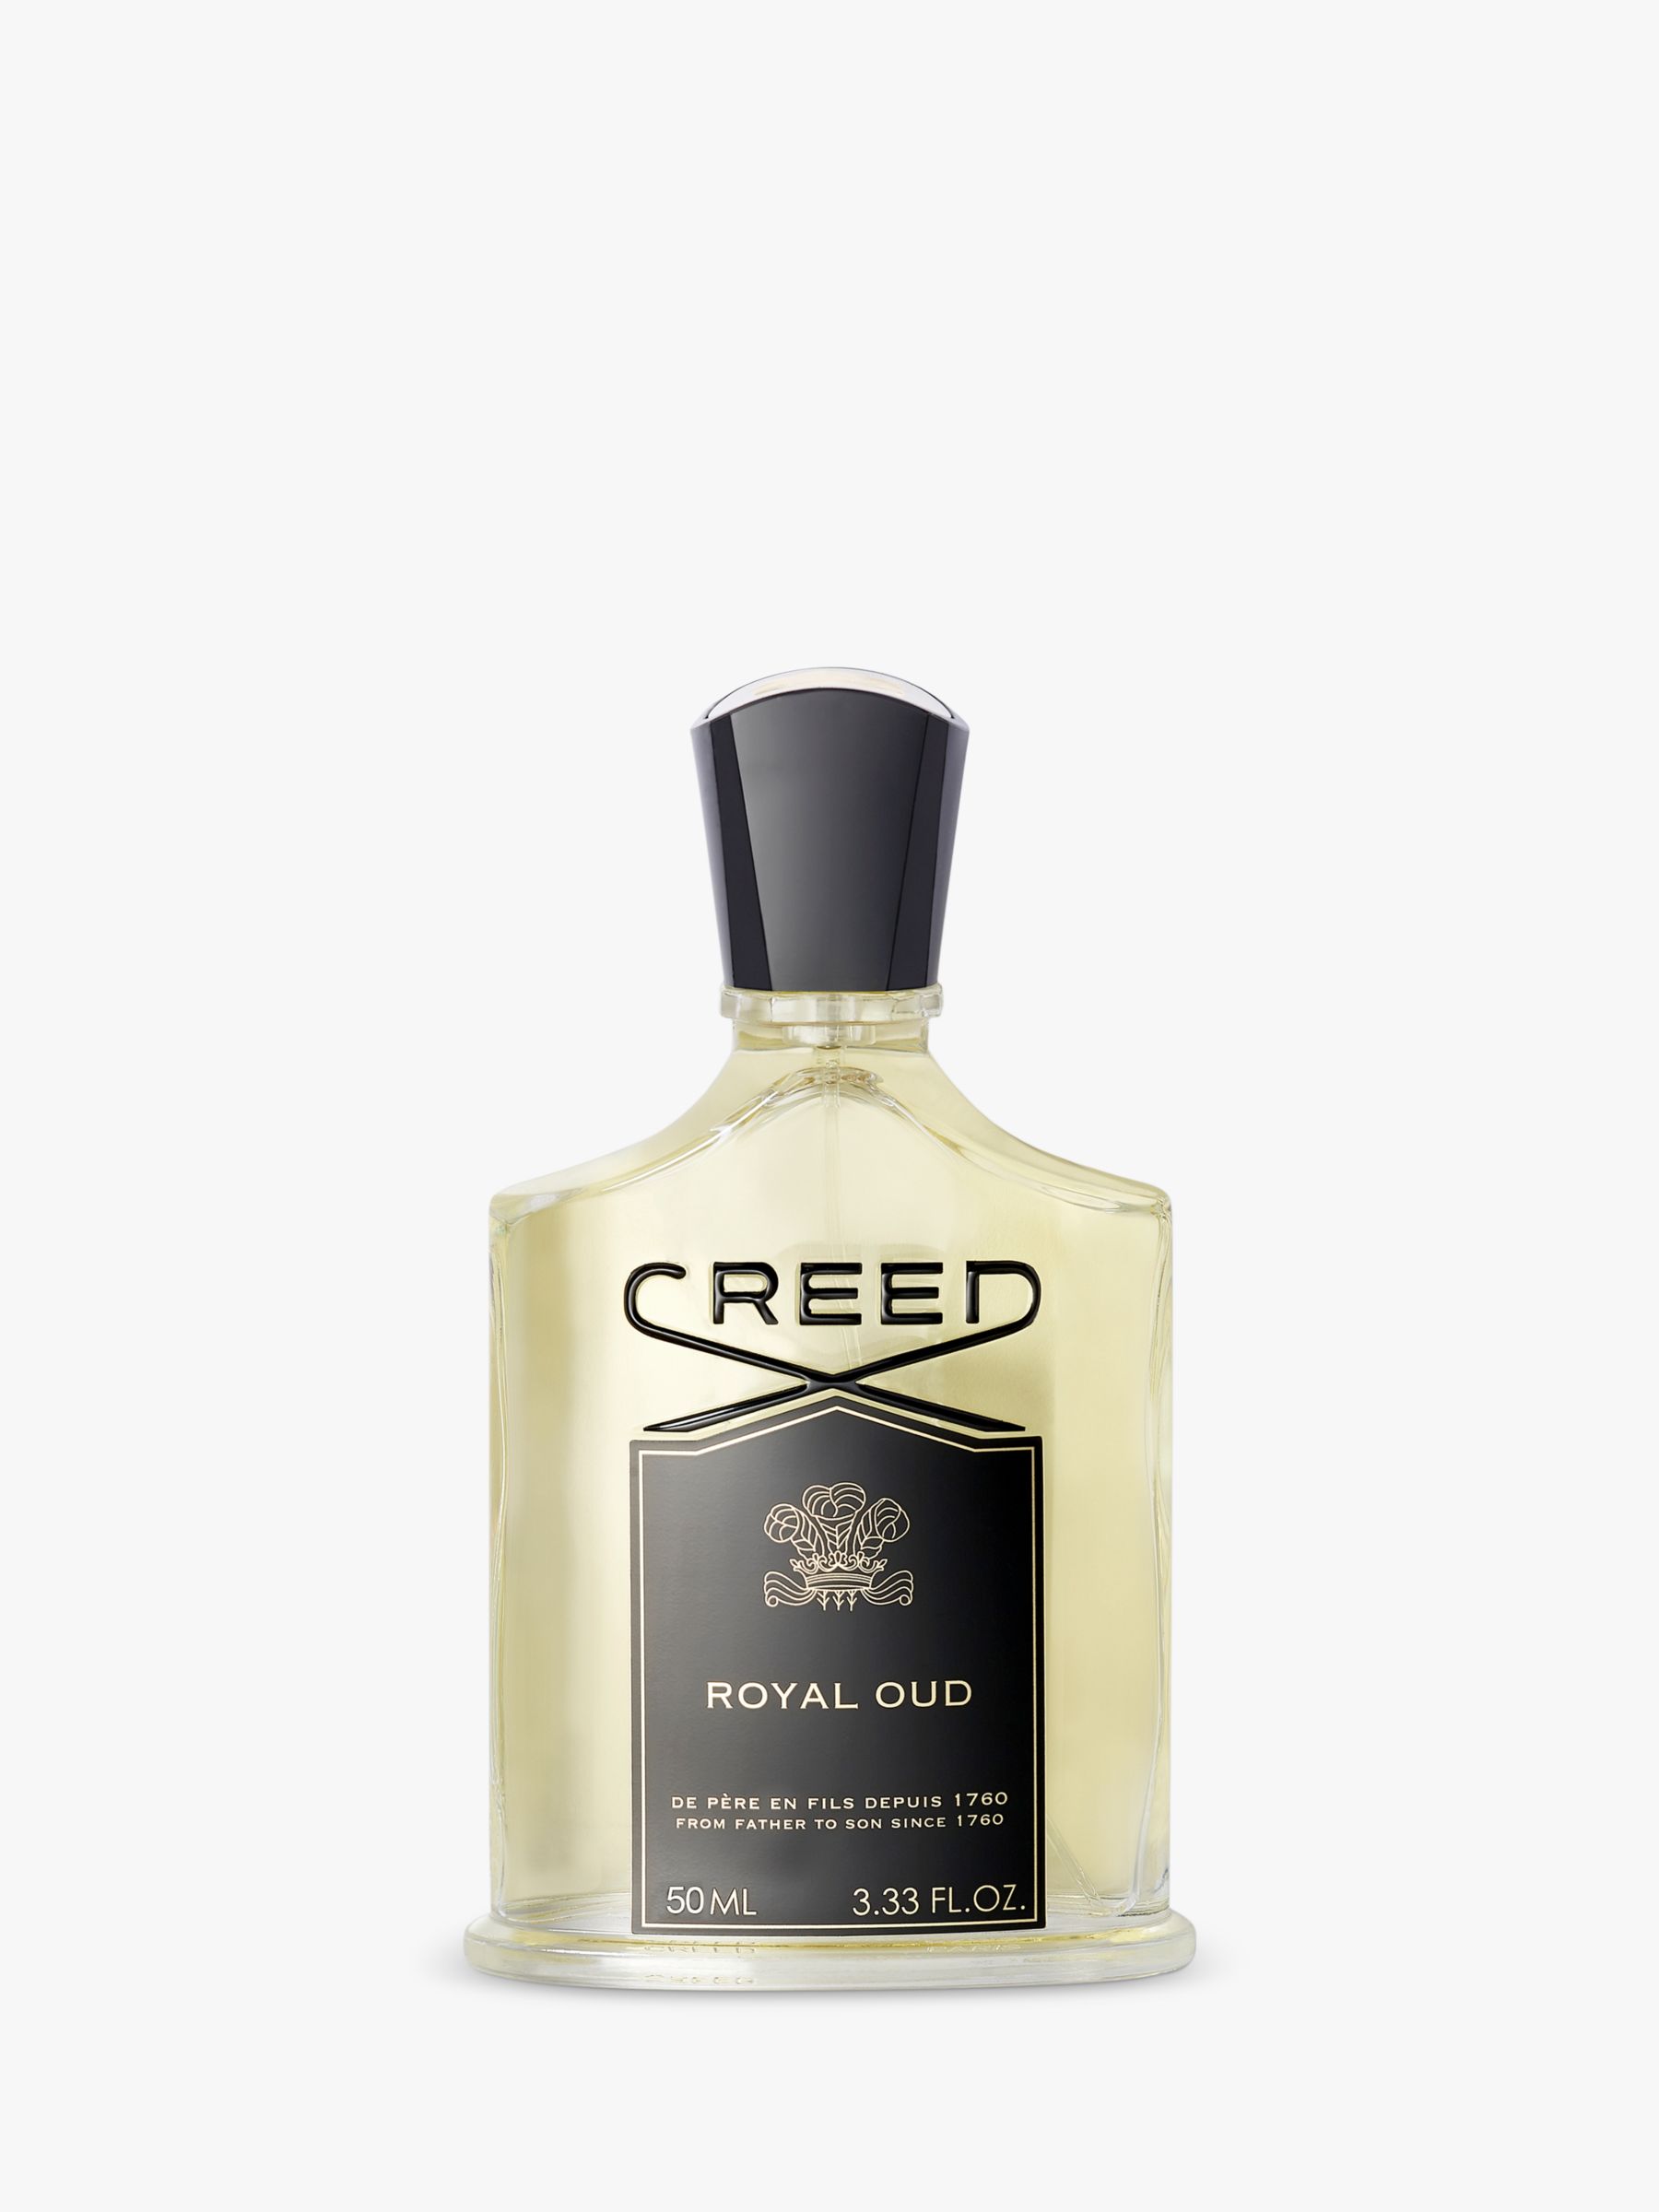 CREED Royal Oud Eau de Parfum, 50ml at 